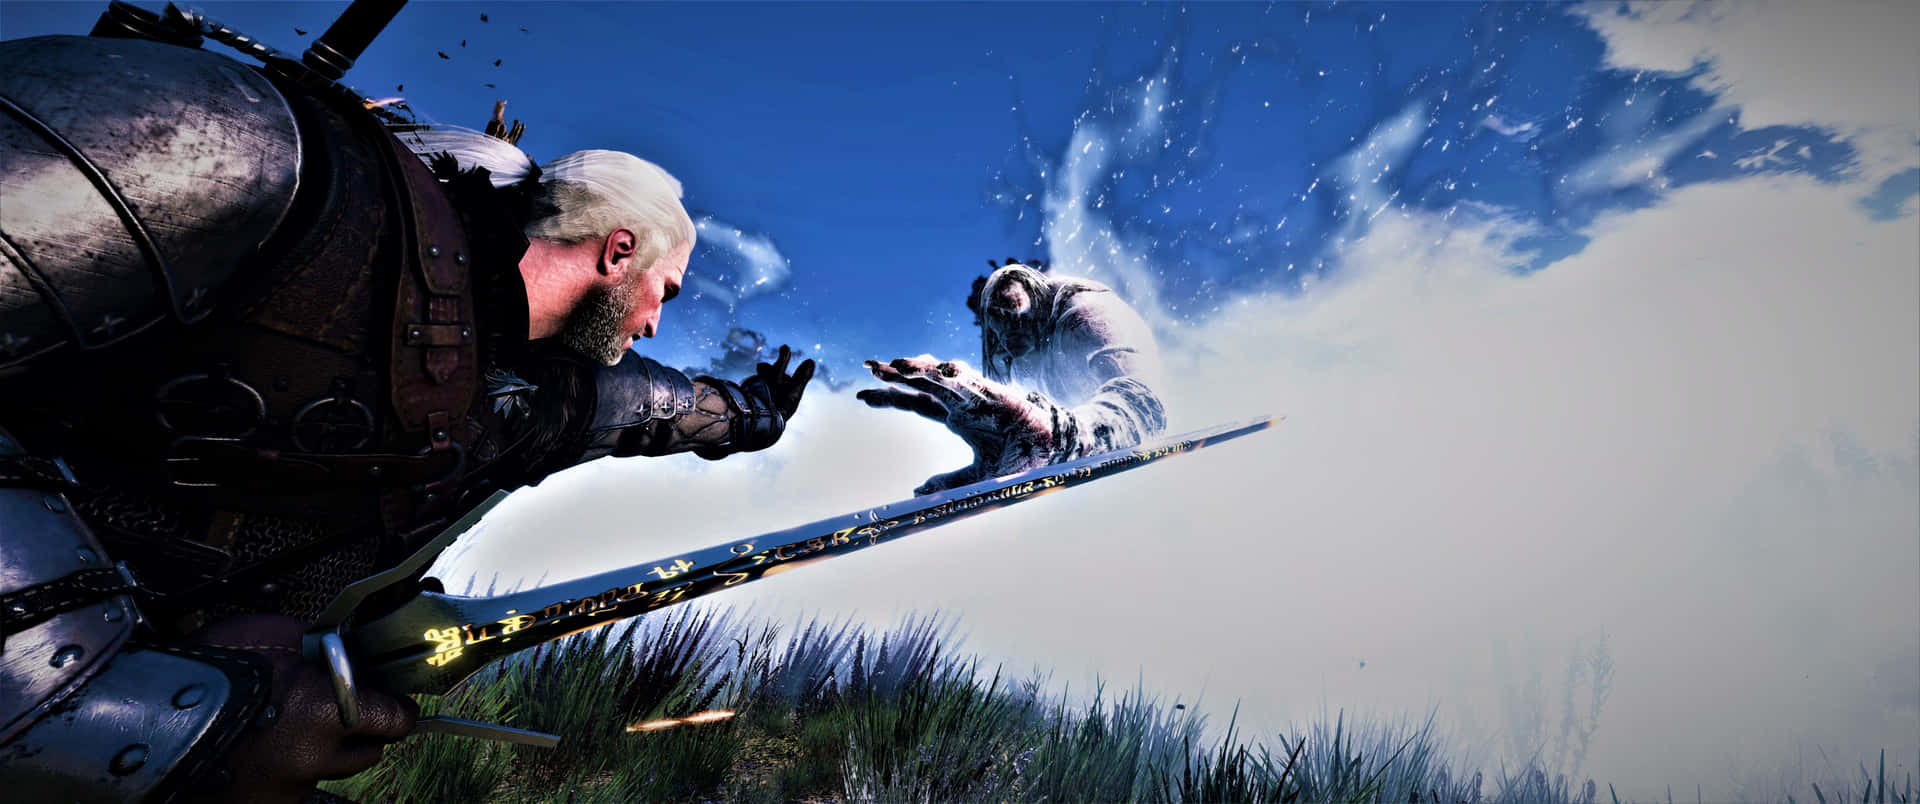 Geraltav Rivia I Witcher-videospelspelet. Wallpaper